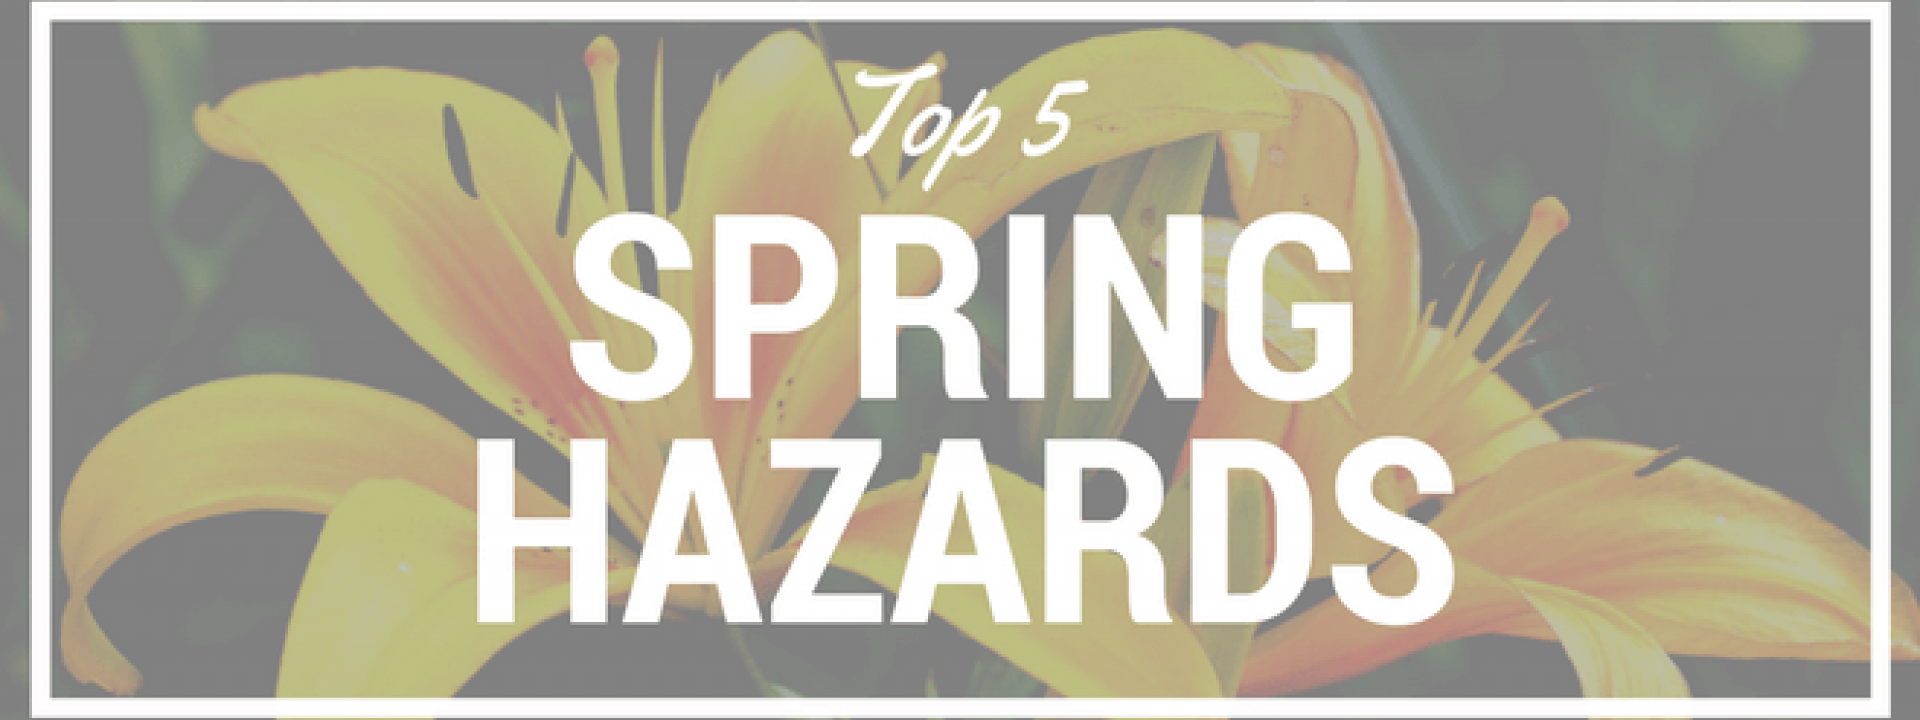 blog-title-top-5-spring-hazards.png